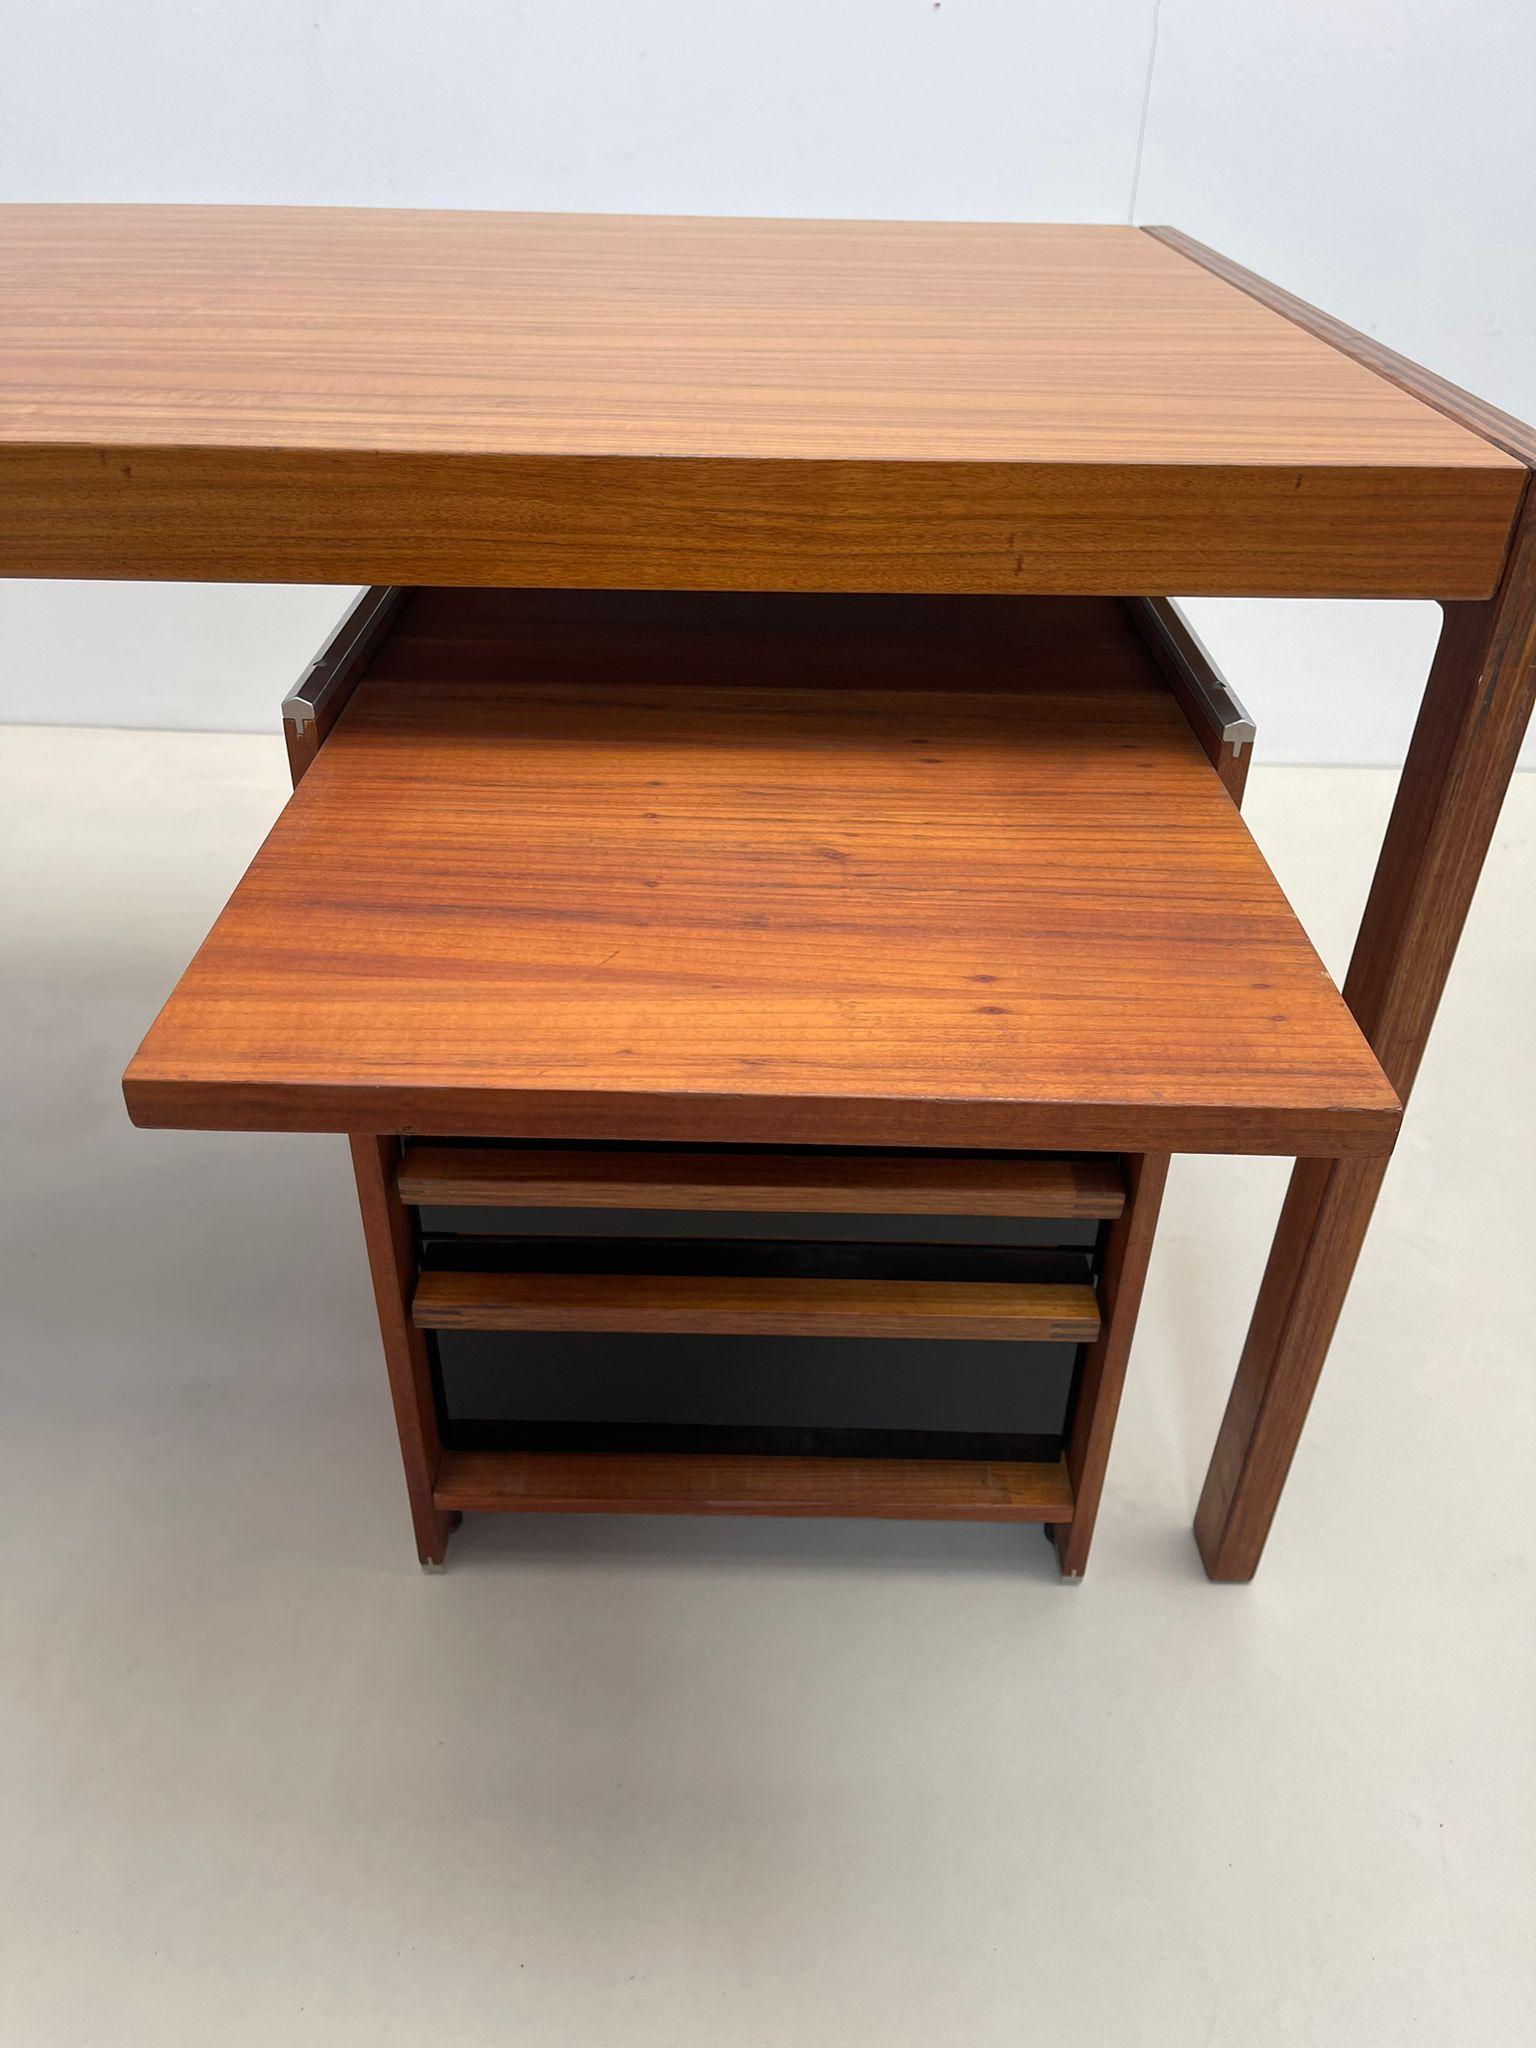 Mid-century wooden scandinavian desk with drawers - 1960s.